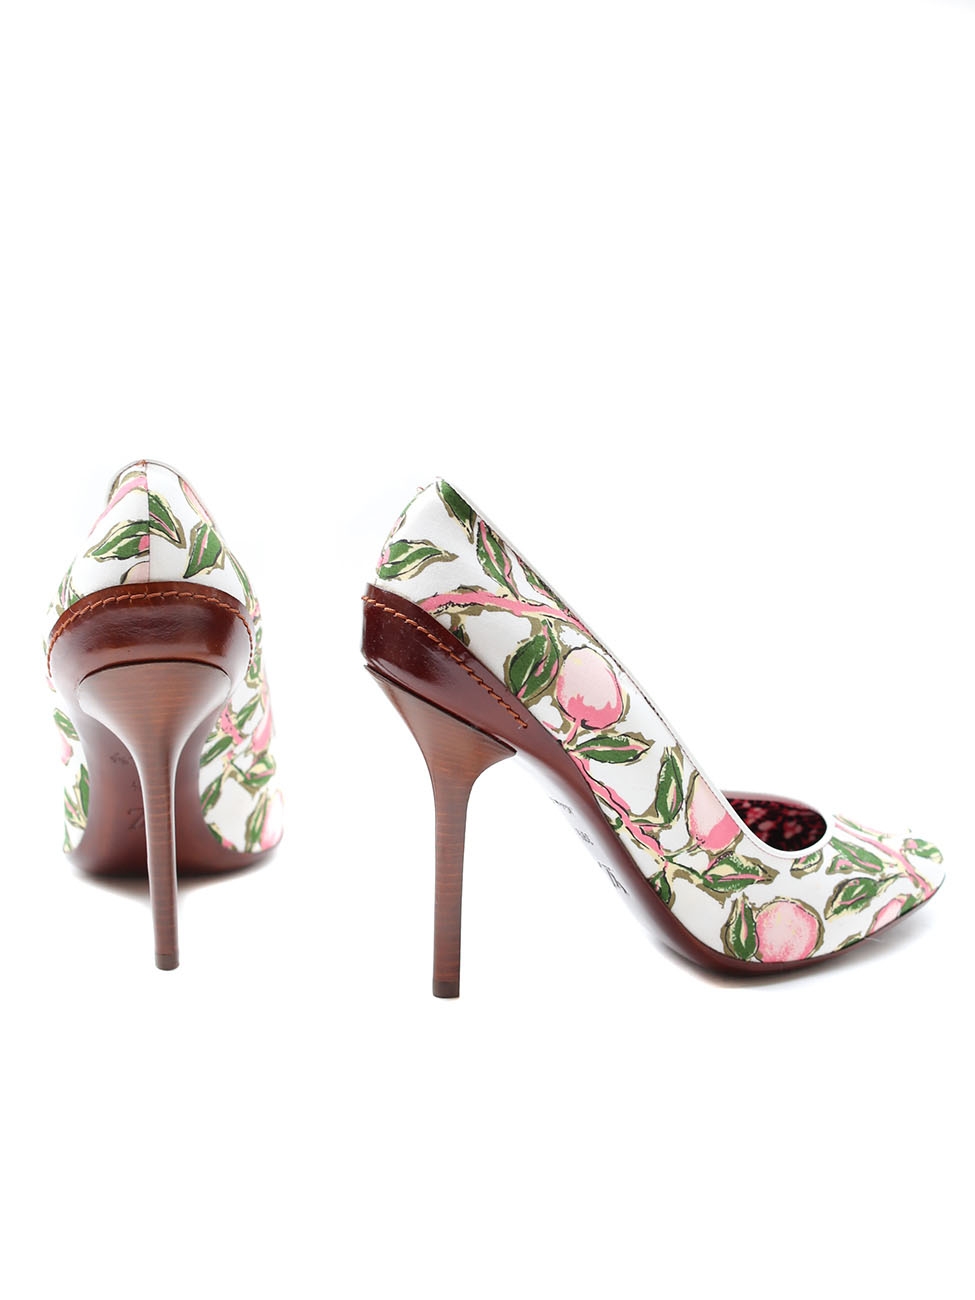 Louise Paris - LOUIS VUITTON Flower fields print white pink and red stiletto heels pumps NEW ...